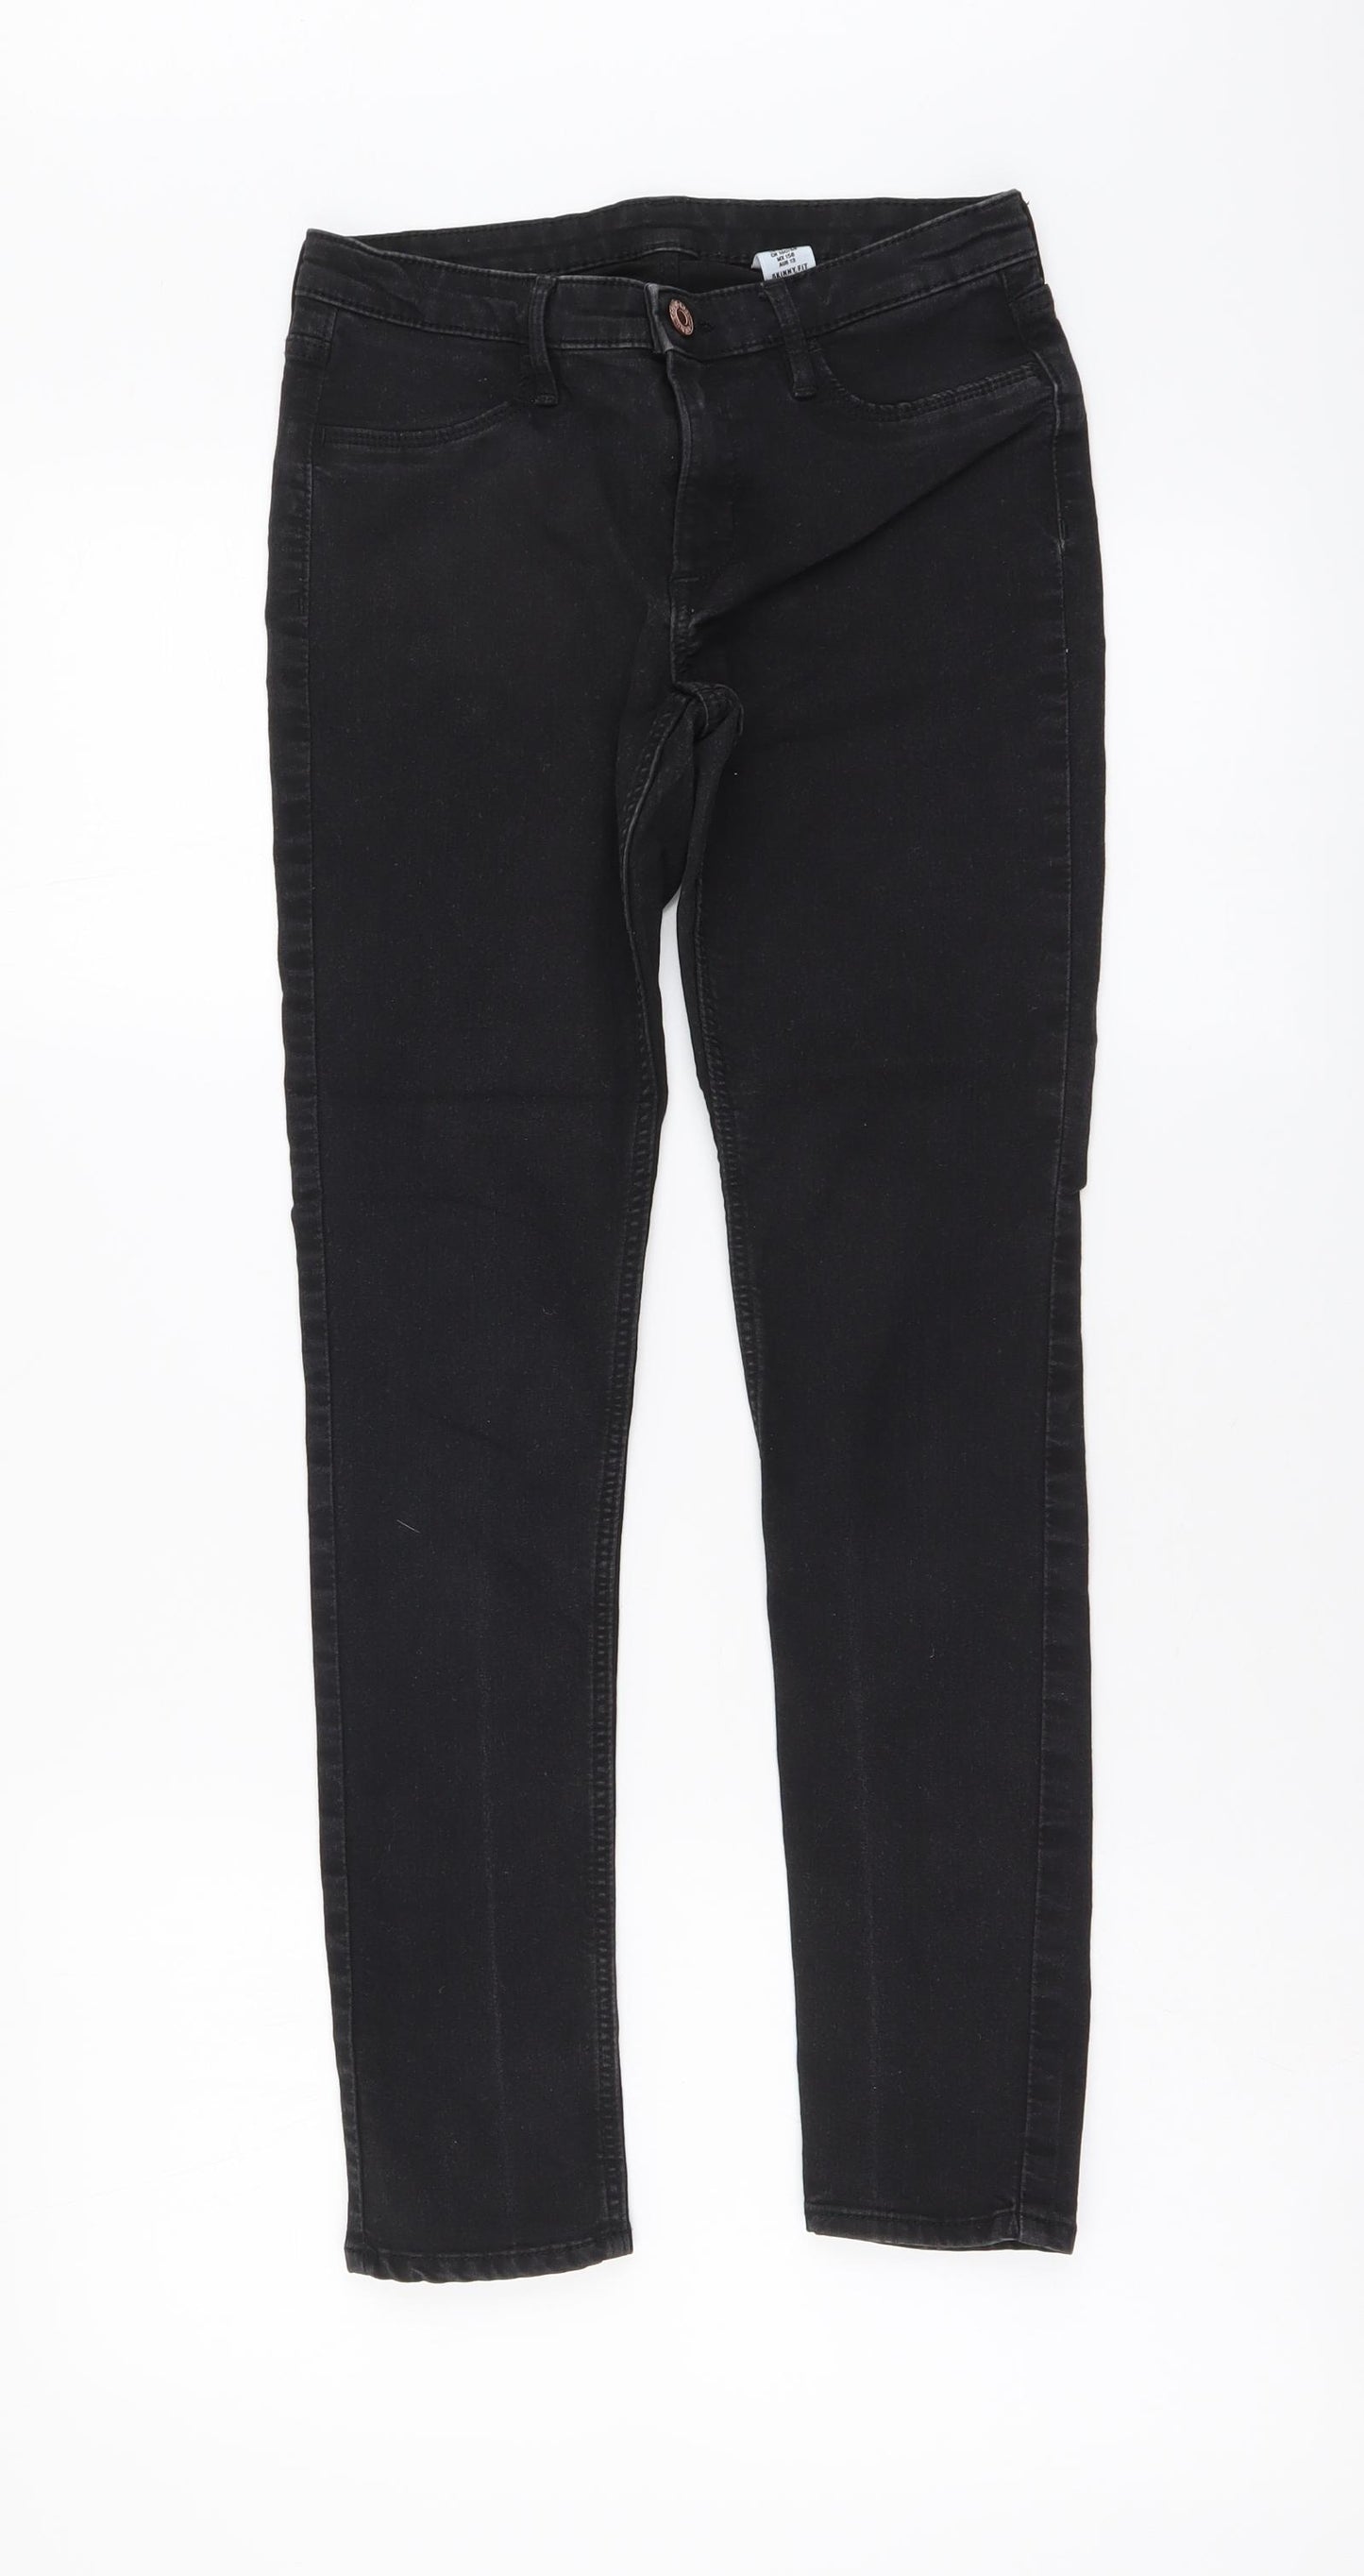 Denim & Co. Girls Black Cotton Skinny Jeans Size 12-13 Years Regular Button